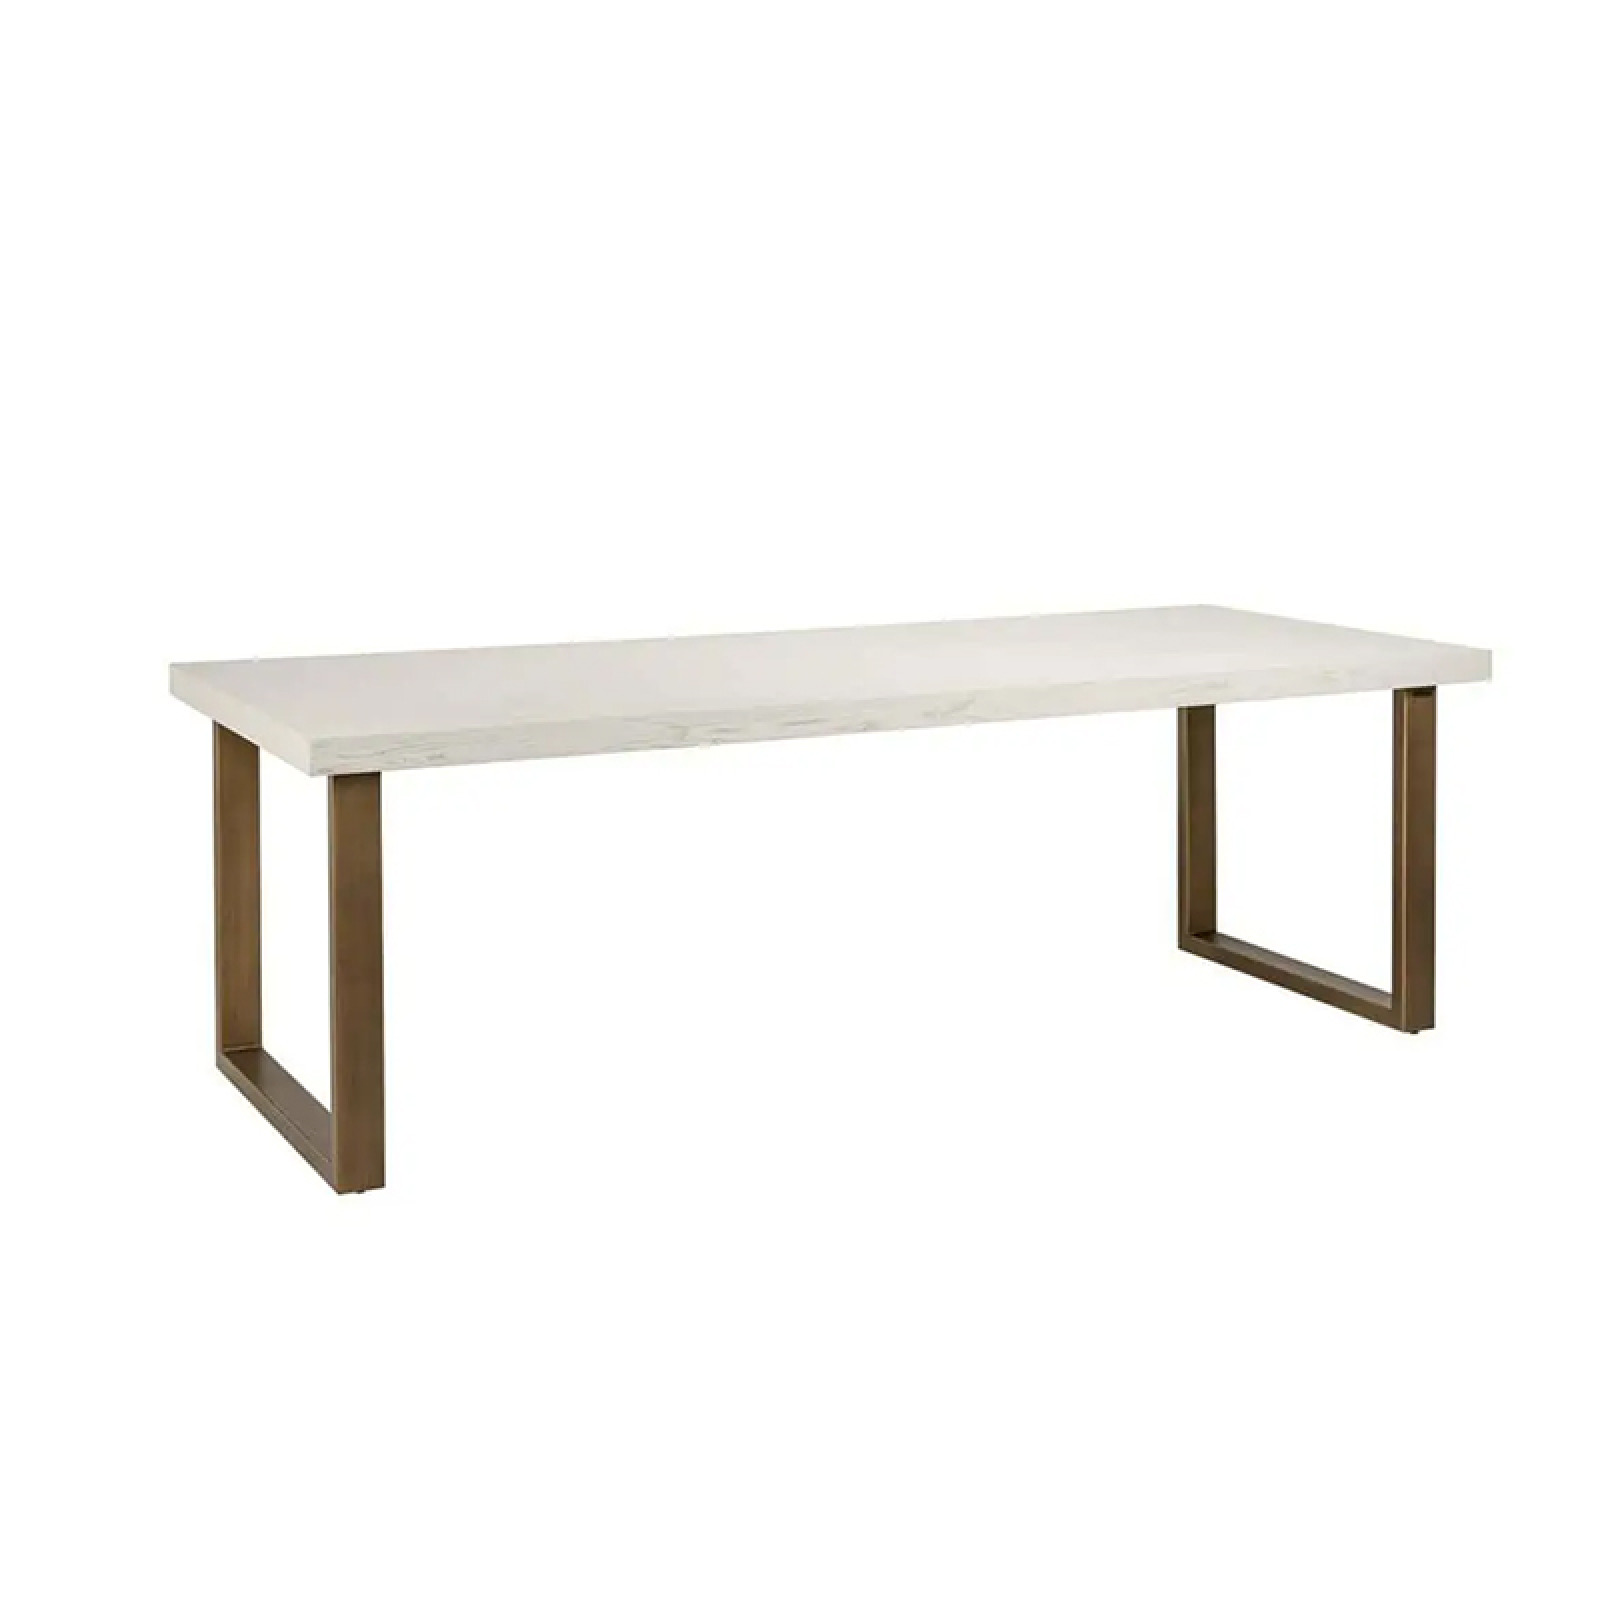 Whitebone dining table